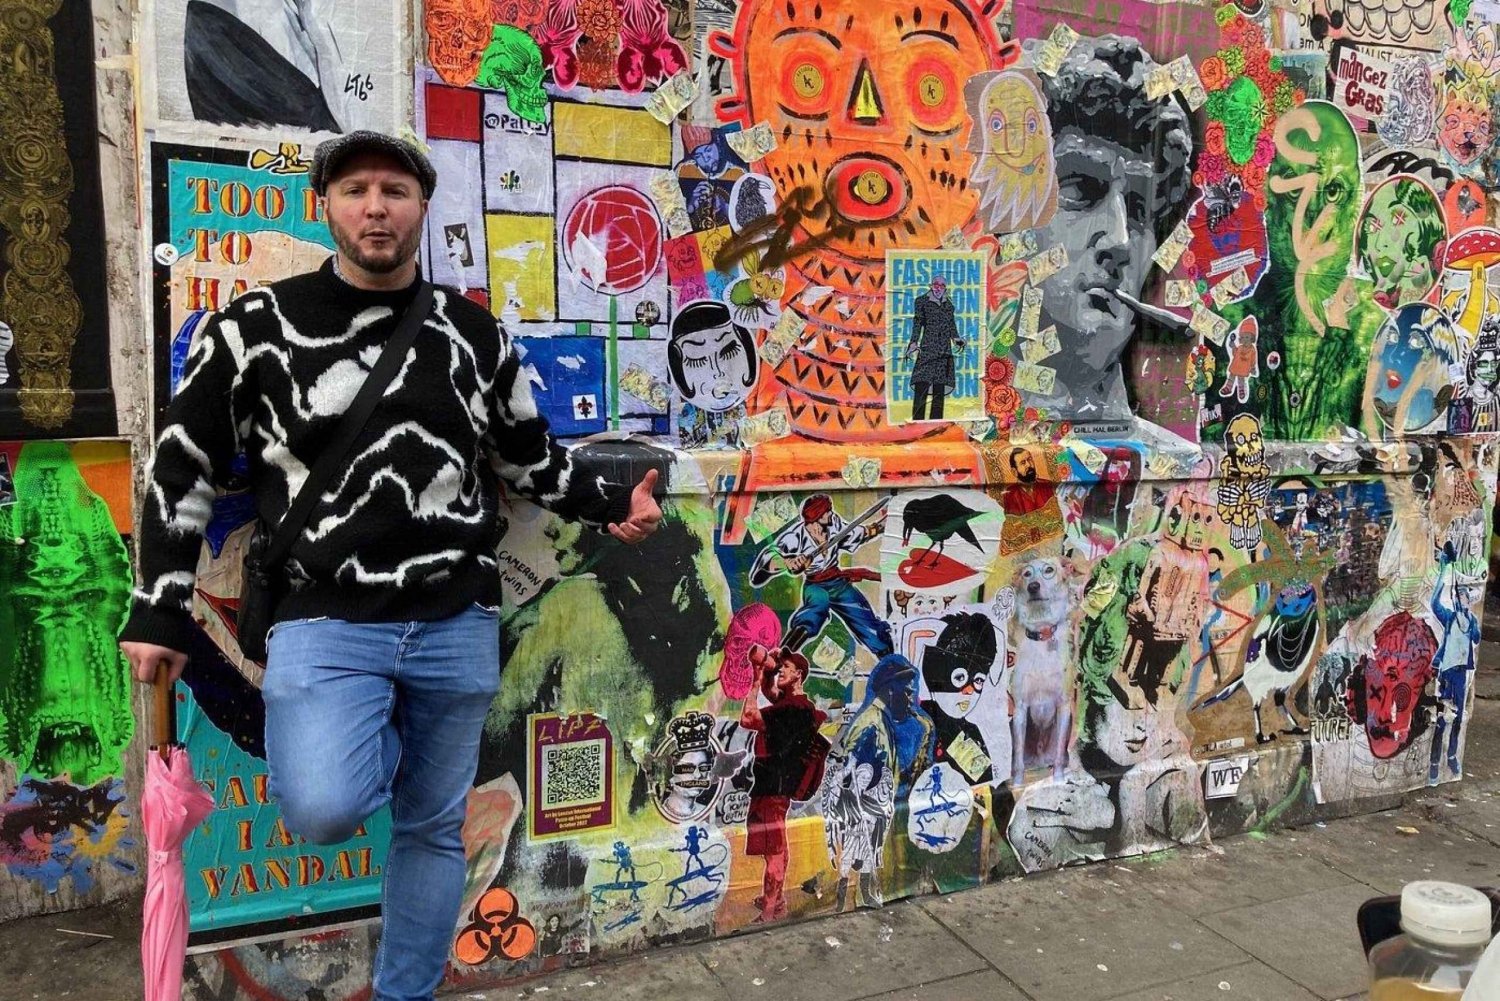 East End London - Instagrammable Street Art i wycieczka po graffiti